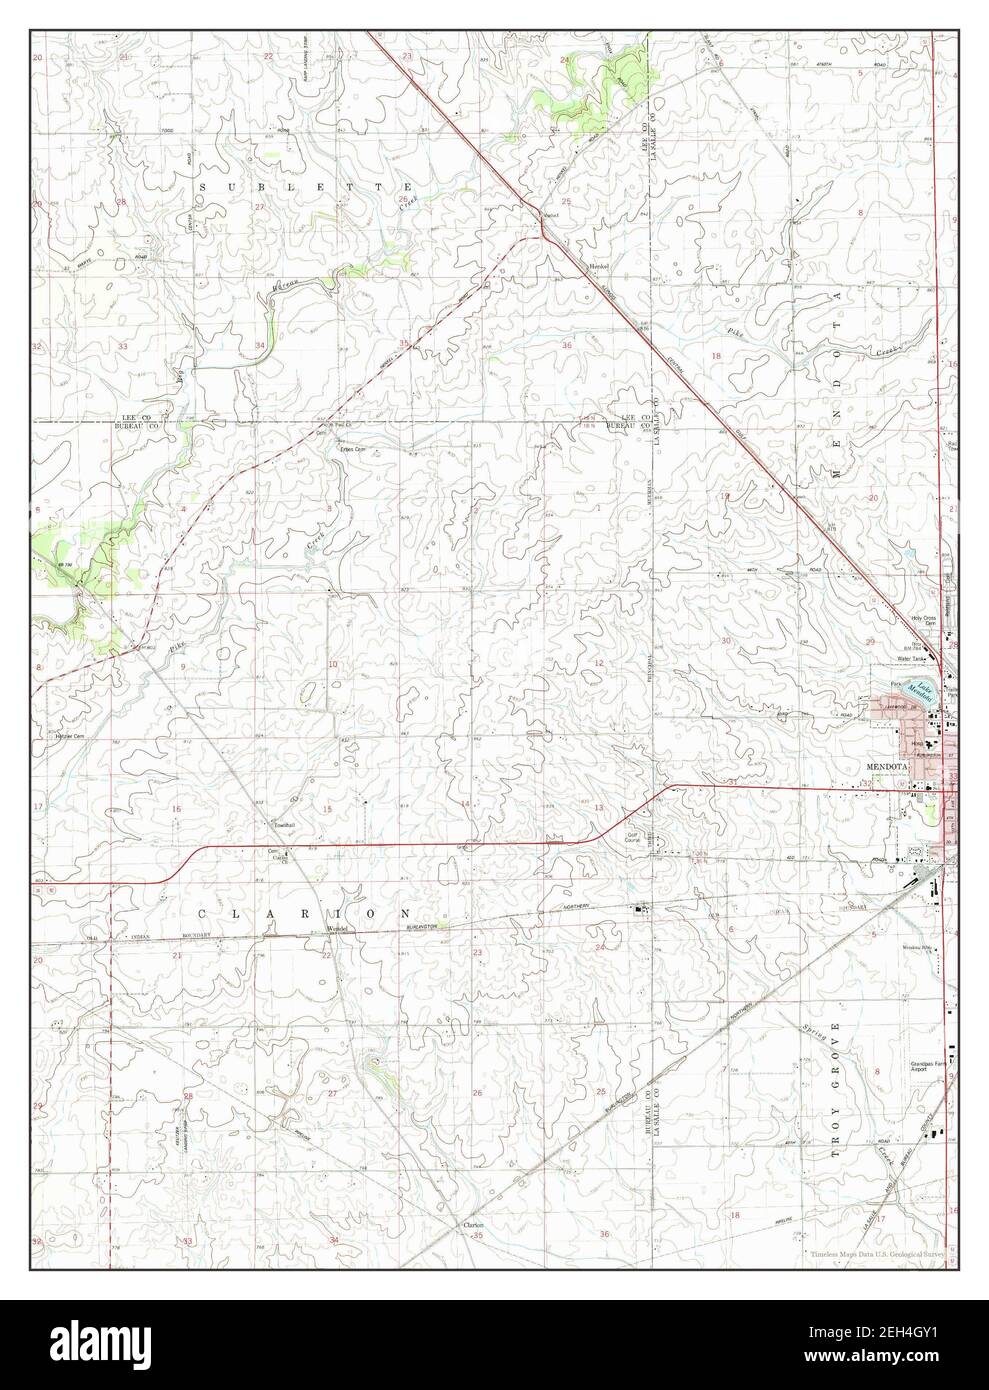 Mendota West, Illinois, map 1982, 1:24000, United States of America by Timeless Maps, data U.S. Geological Survey Stock Photo